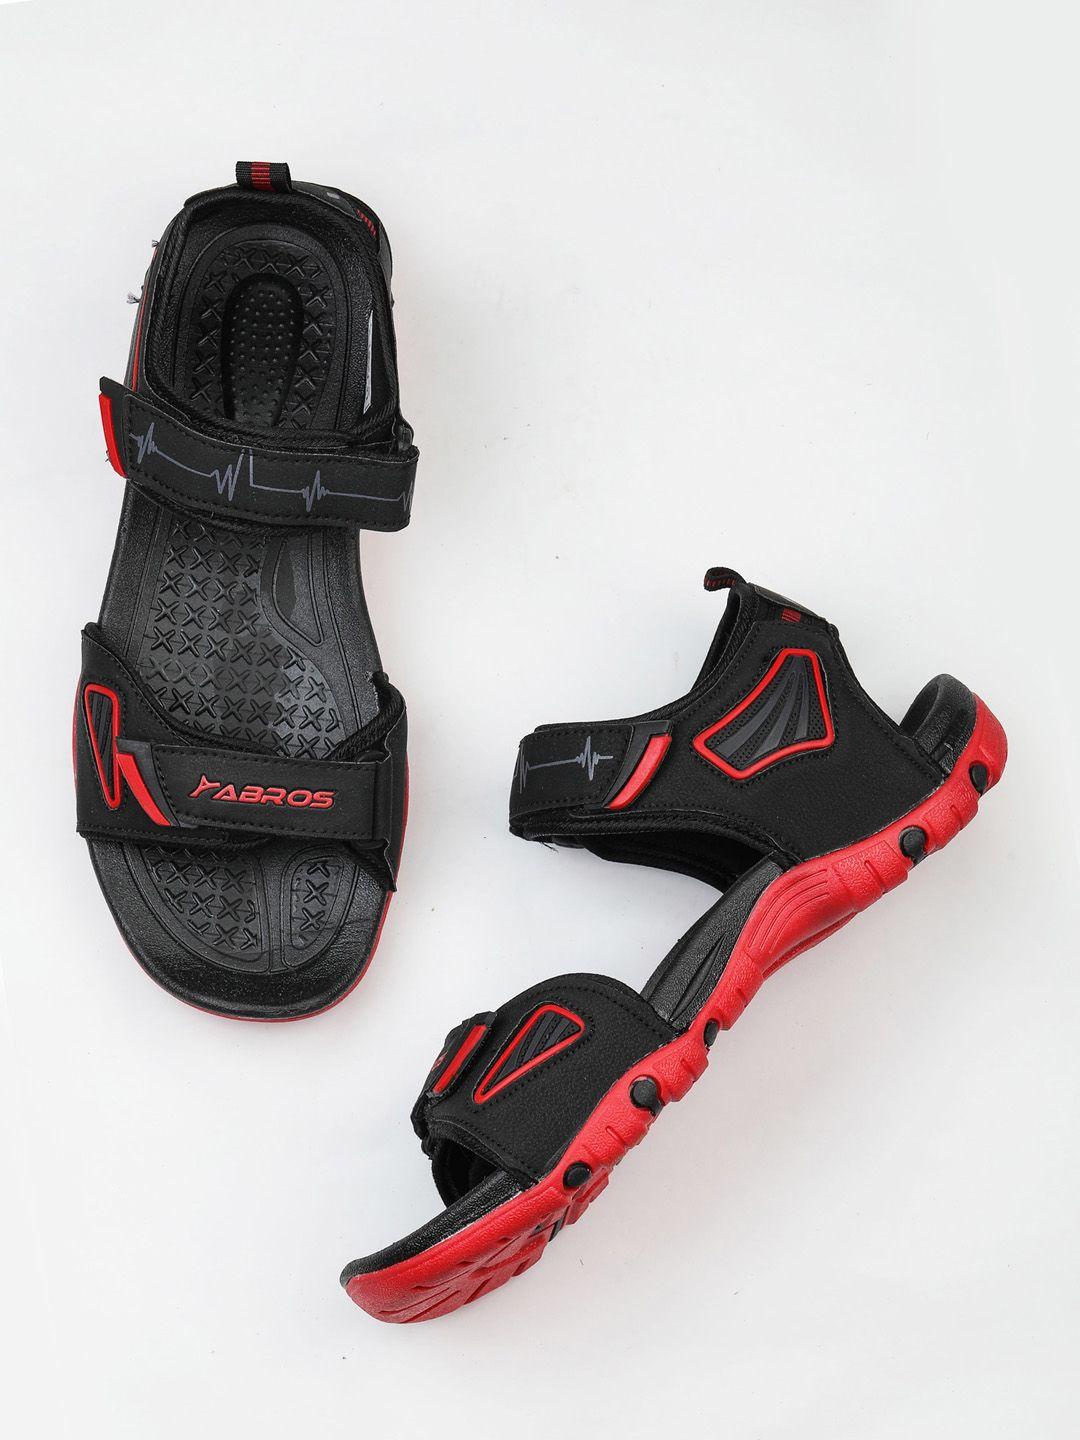 abros-men-black-patterned-sports-sandals